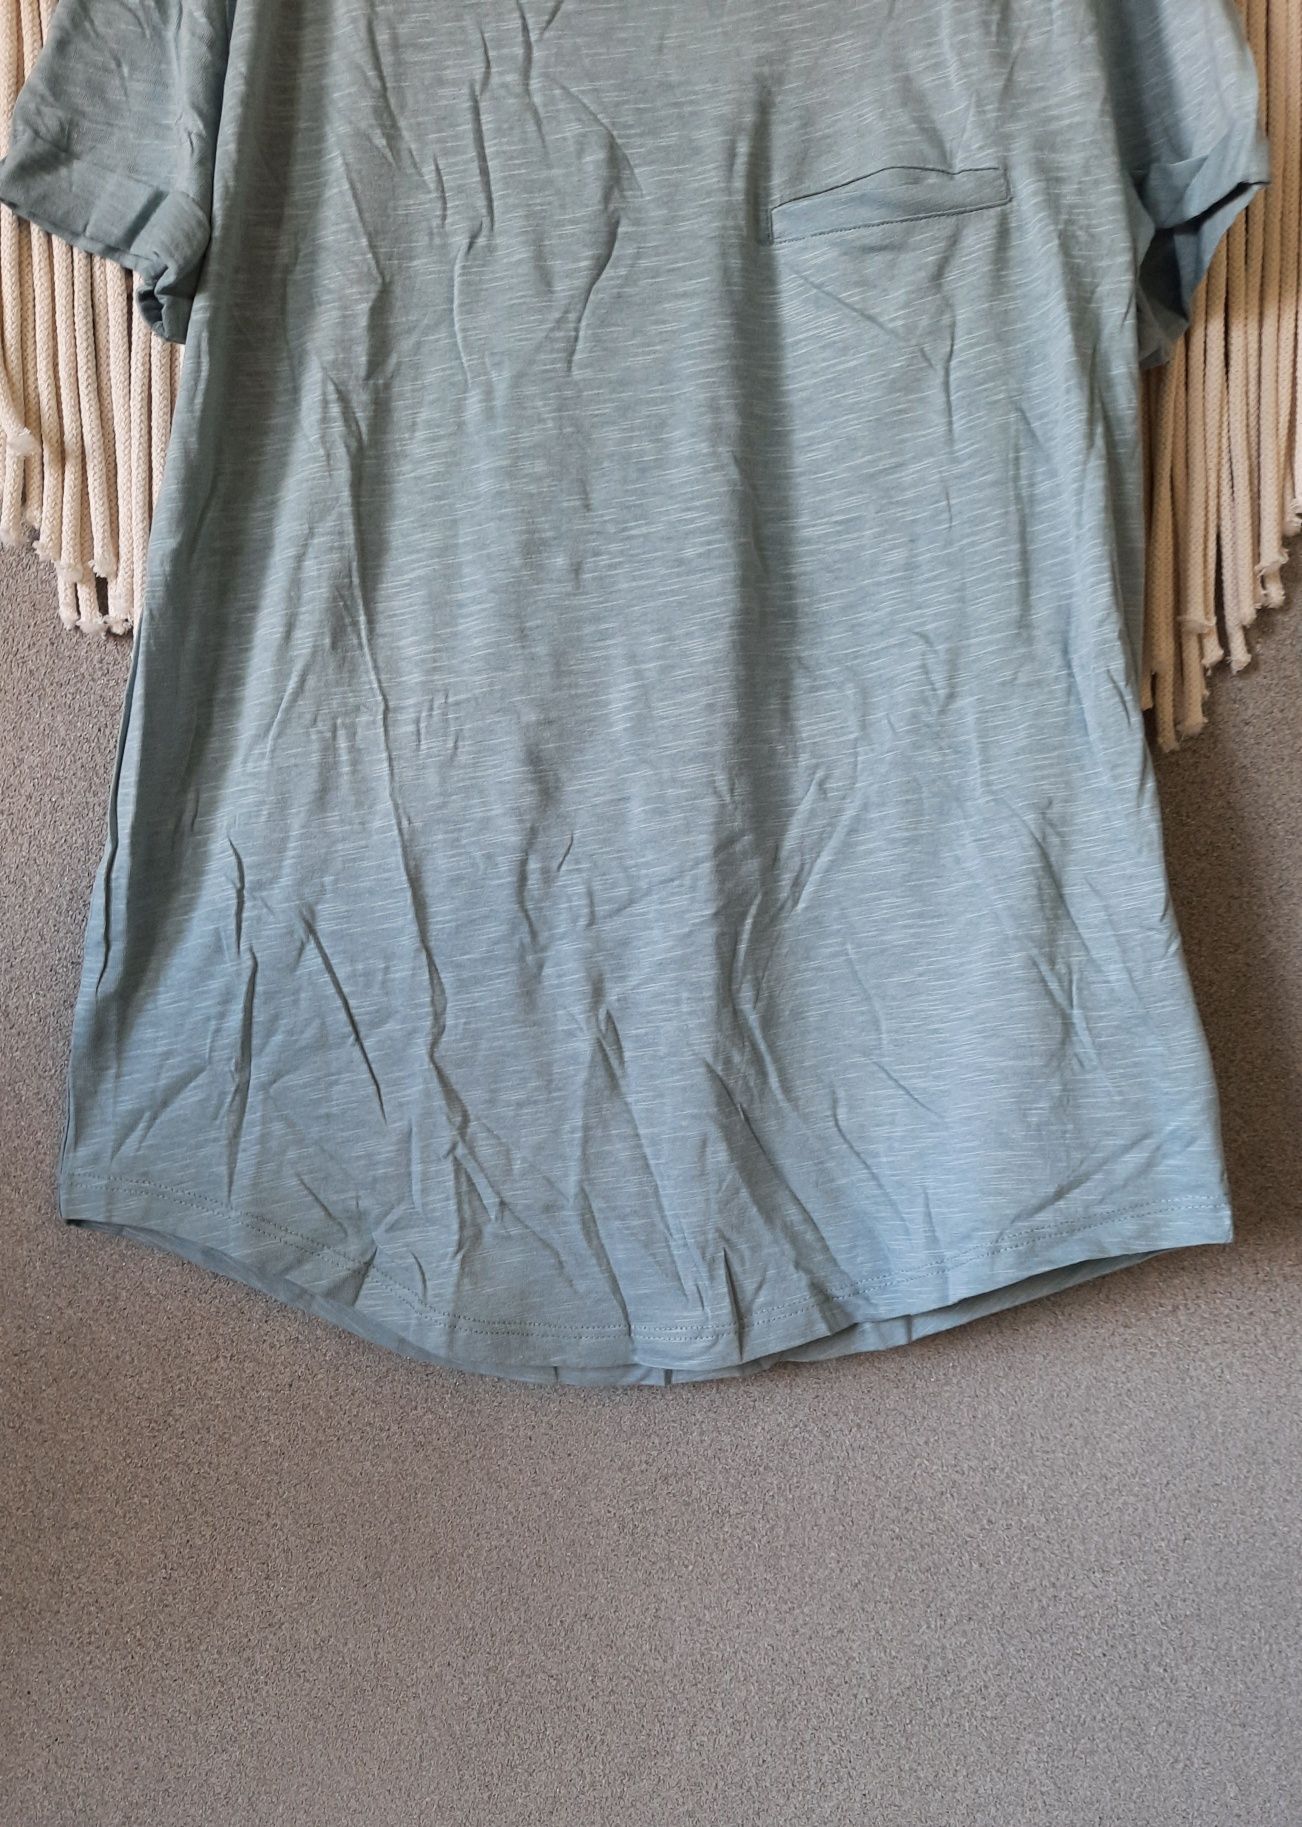 H&M dżersejowy t-shirt jasnoturkusowy melanż R XS/34